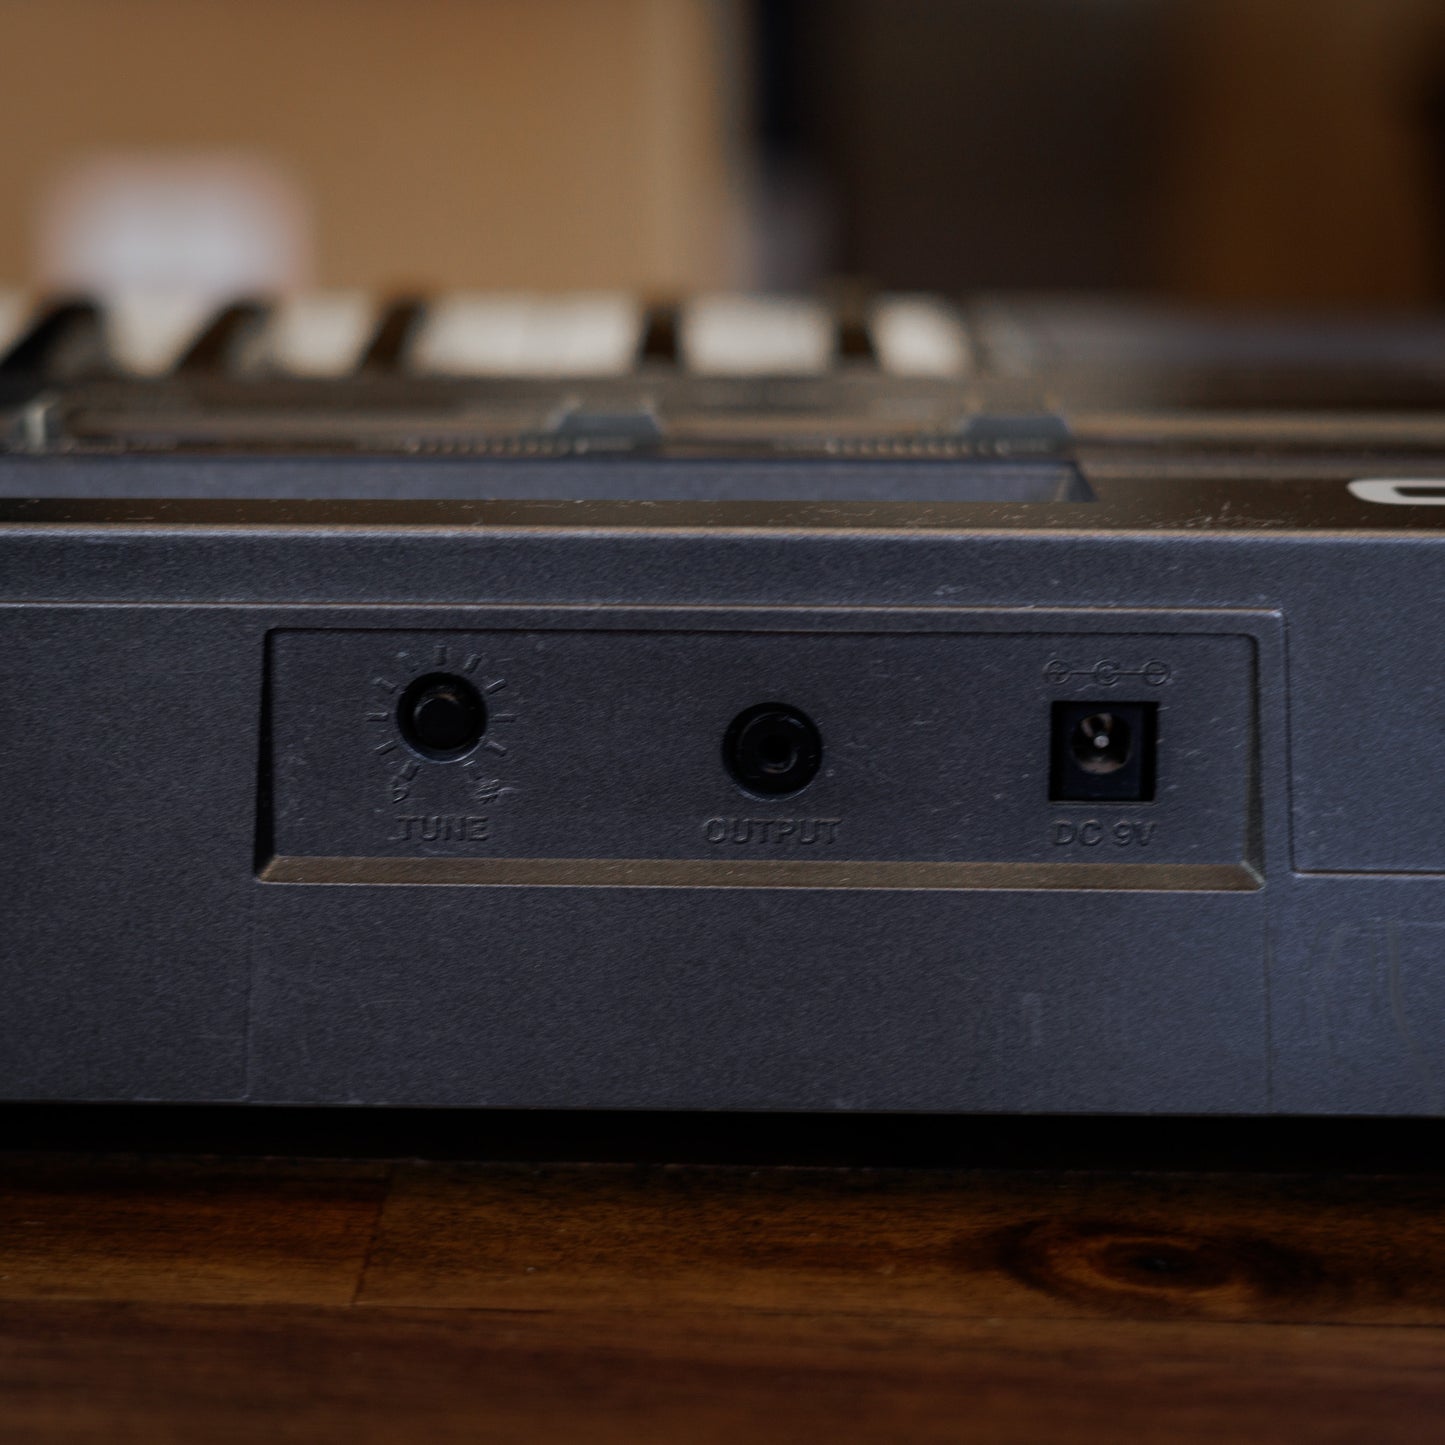 Vintage Casio CT-360 Keyboard